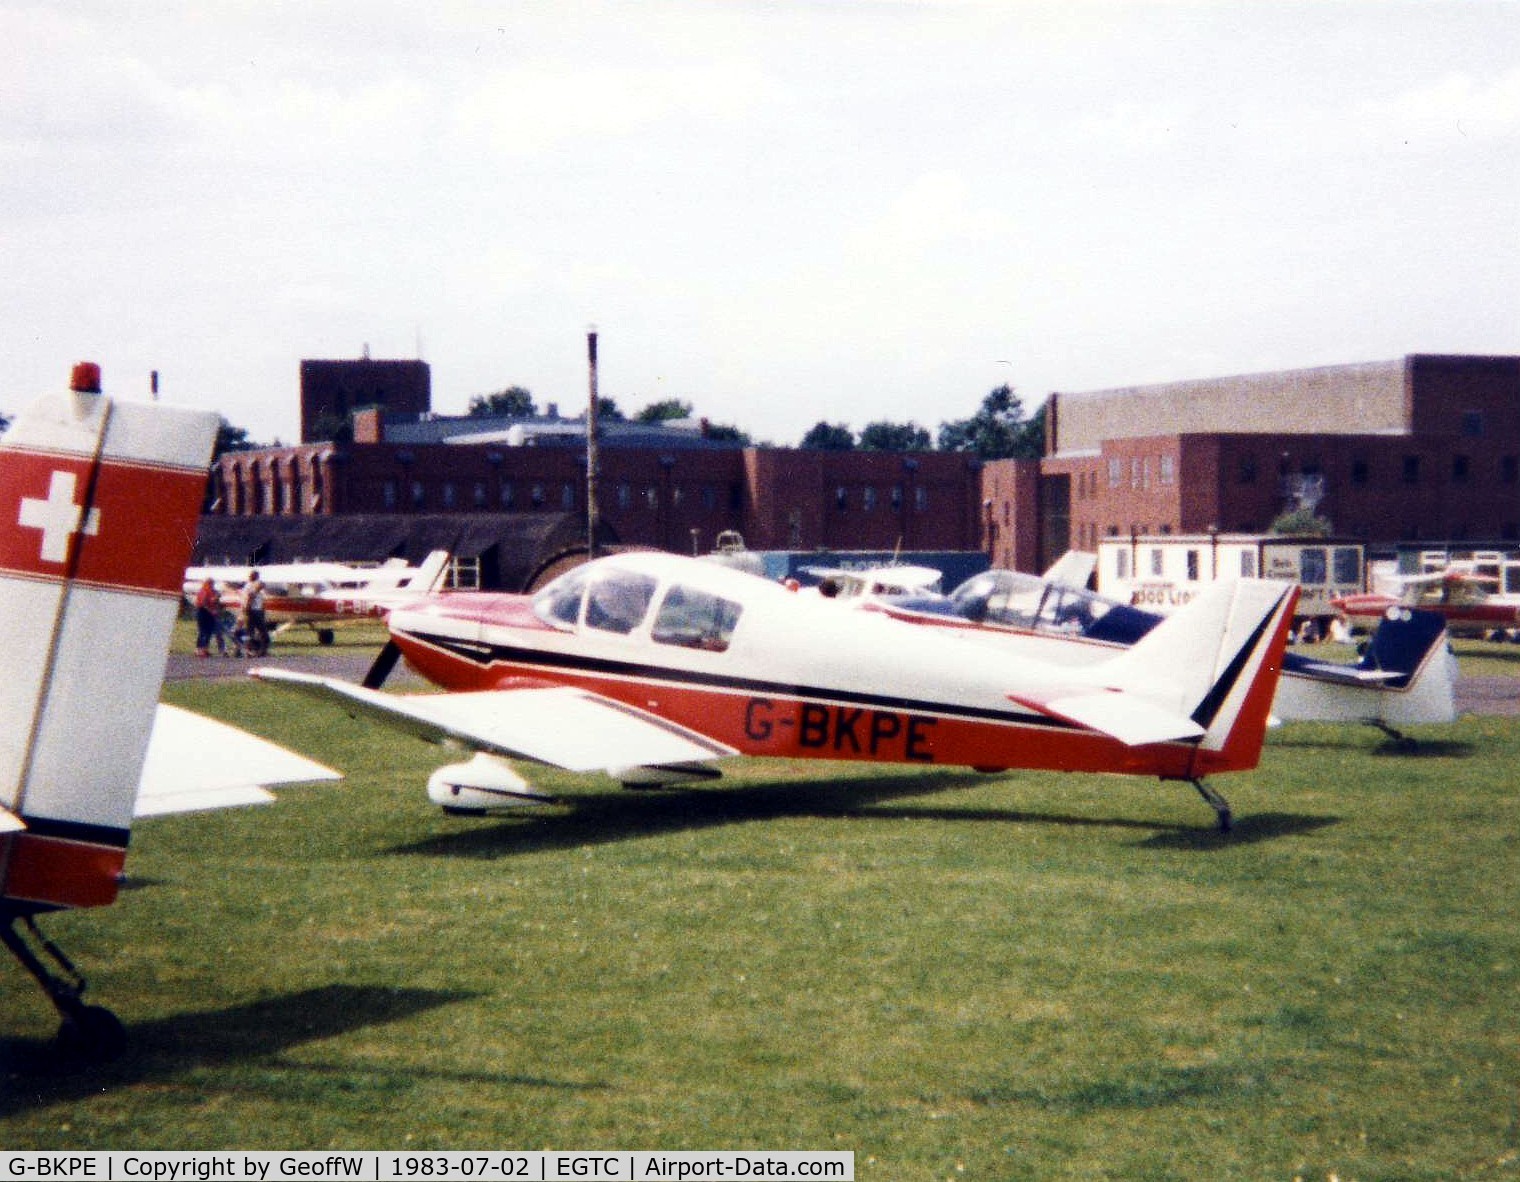 G-BKPE, 1965 CEA Jodel DR-250-160 Capitaine C/N 35, Jodel DR250 G-BKPE attending the 1983 PFA Rally at Cranfield